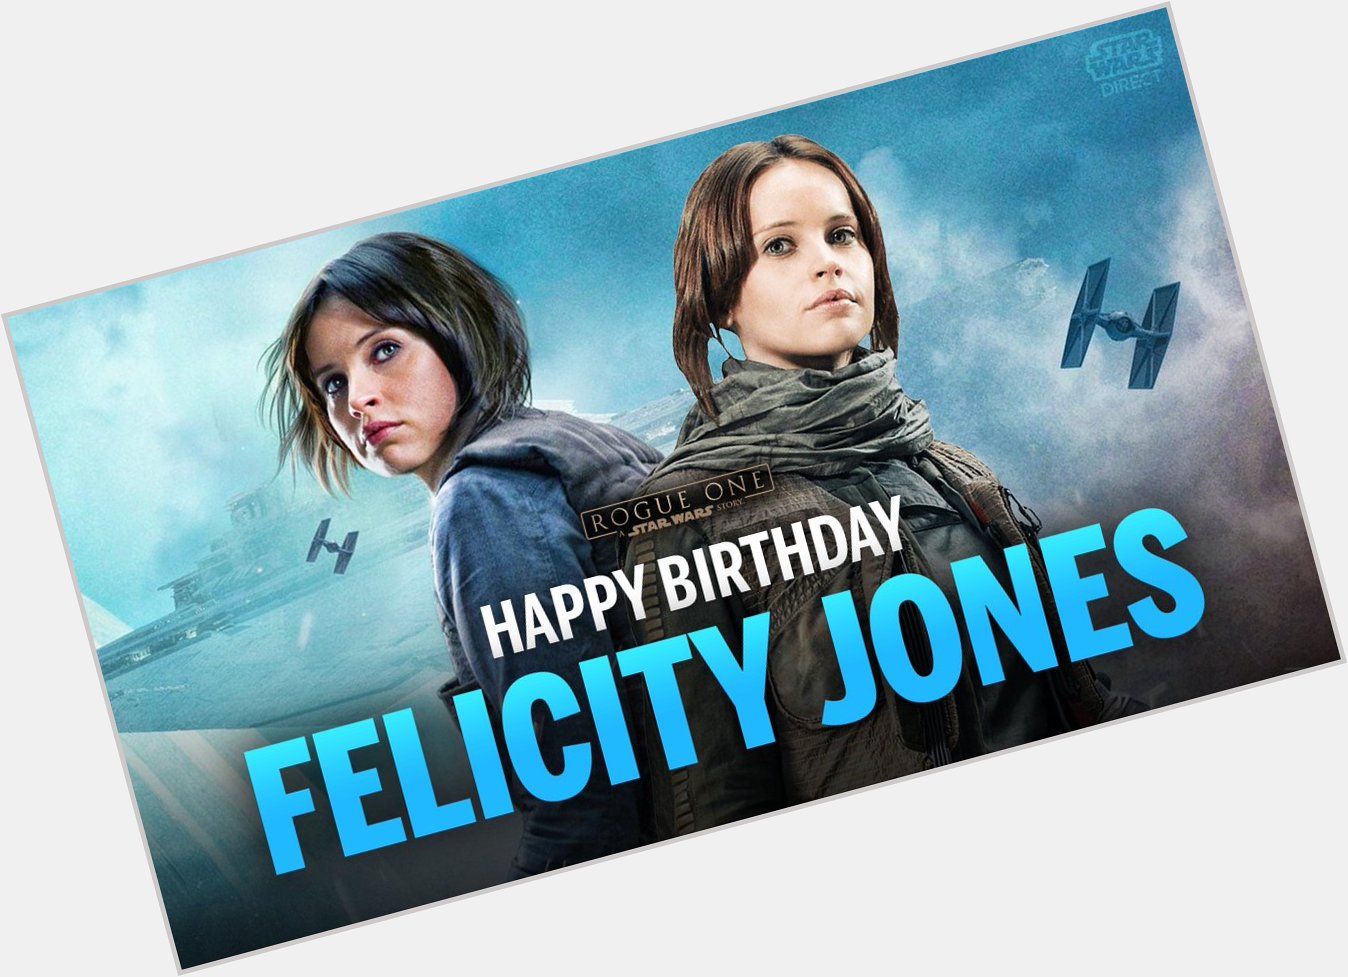 Wishing a very happy 36th birthday to Jynn Erso herself, actress Felicity Jones! 